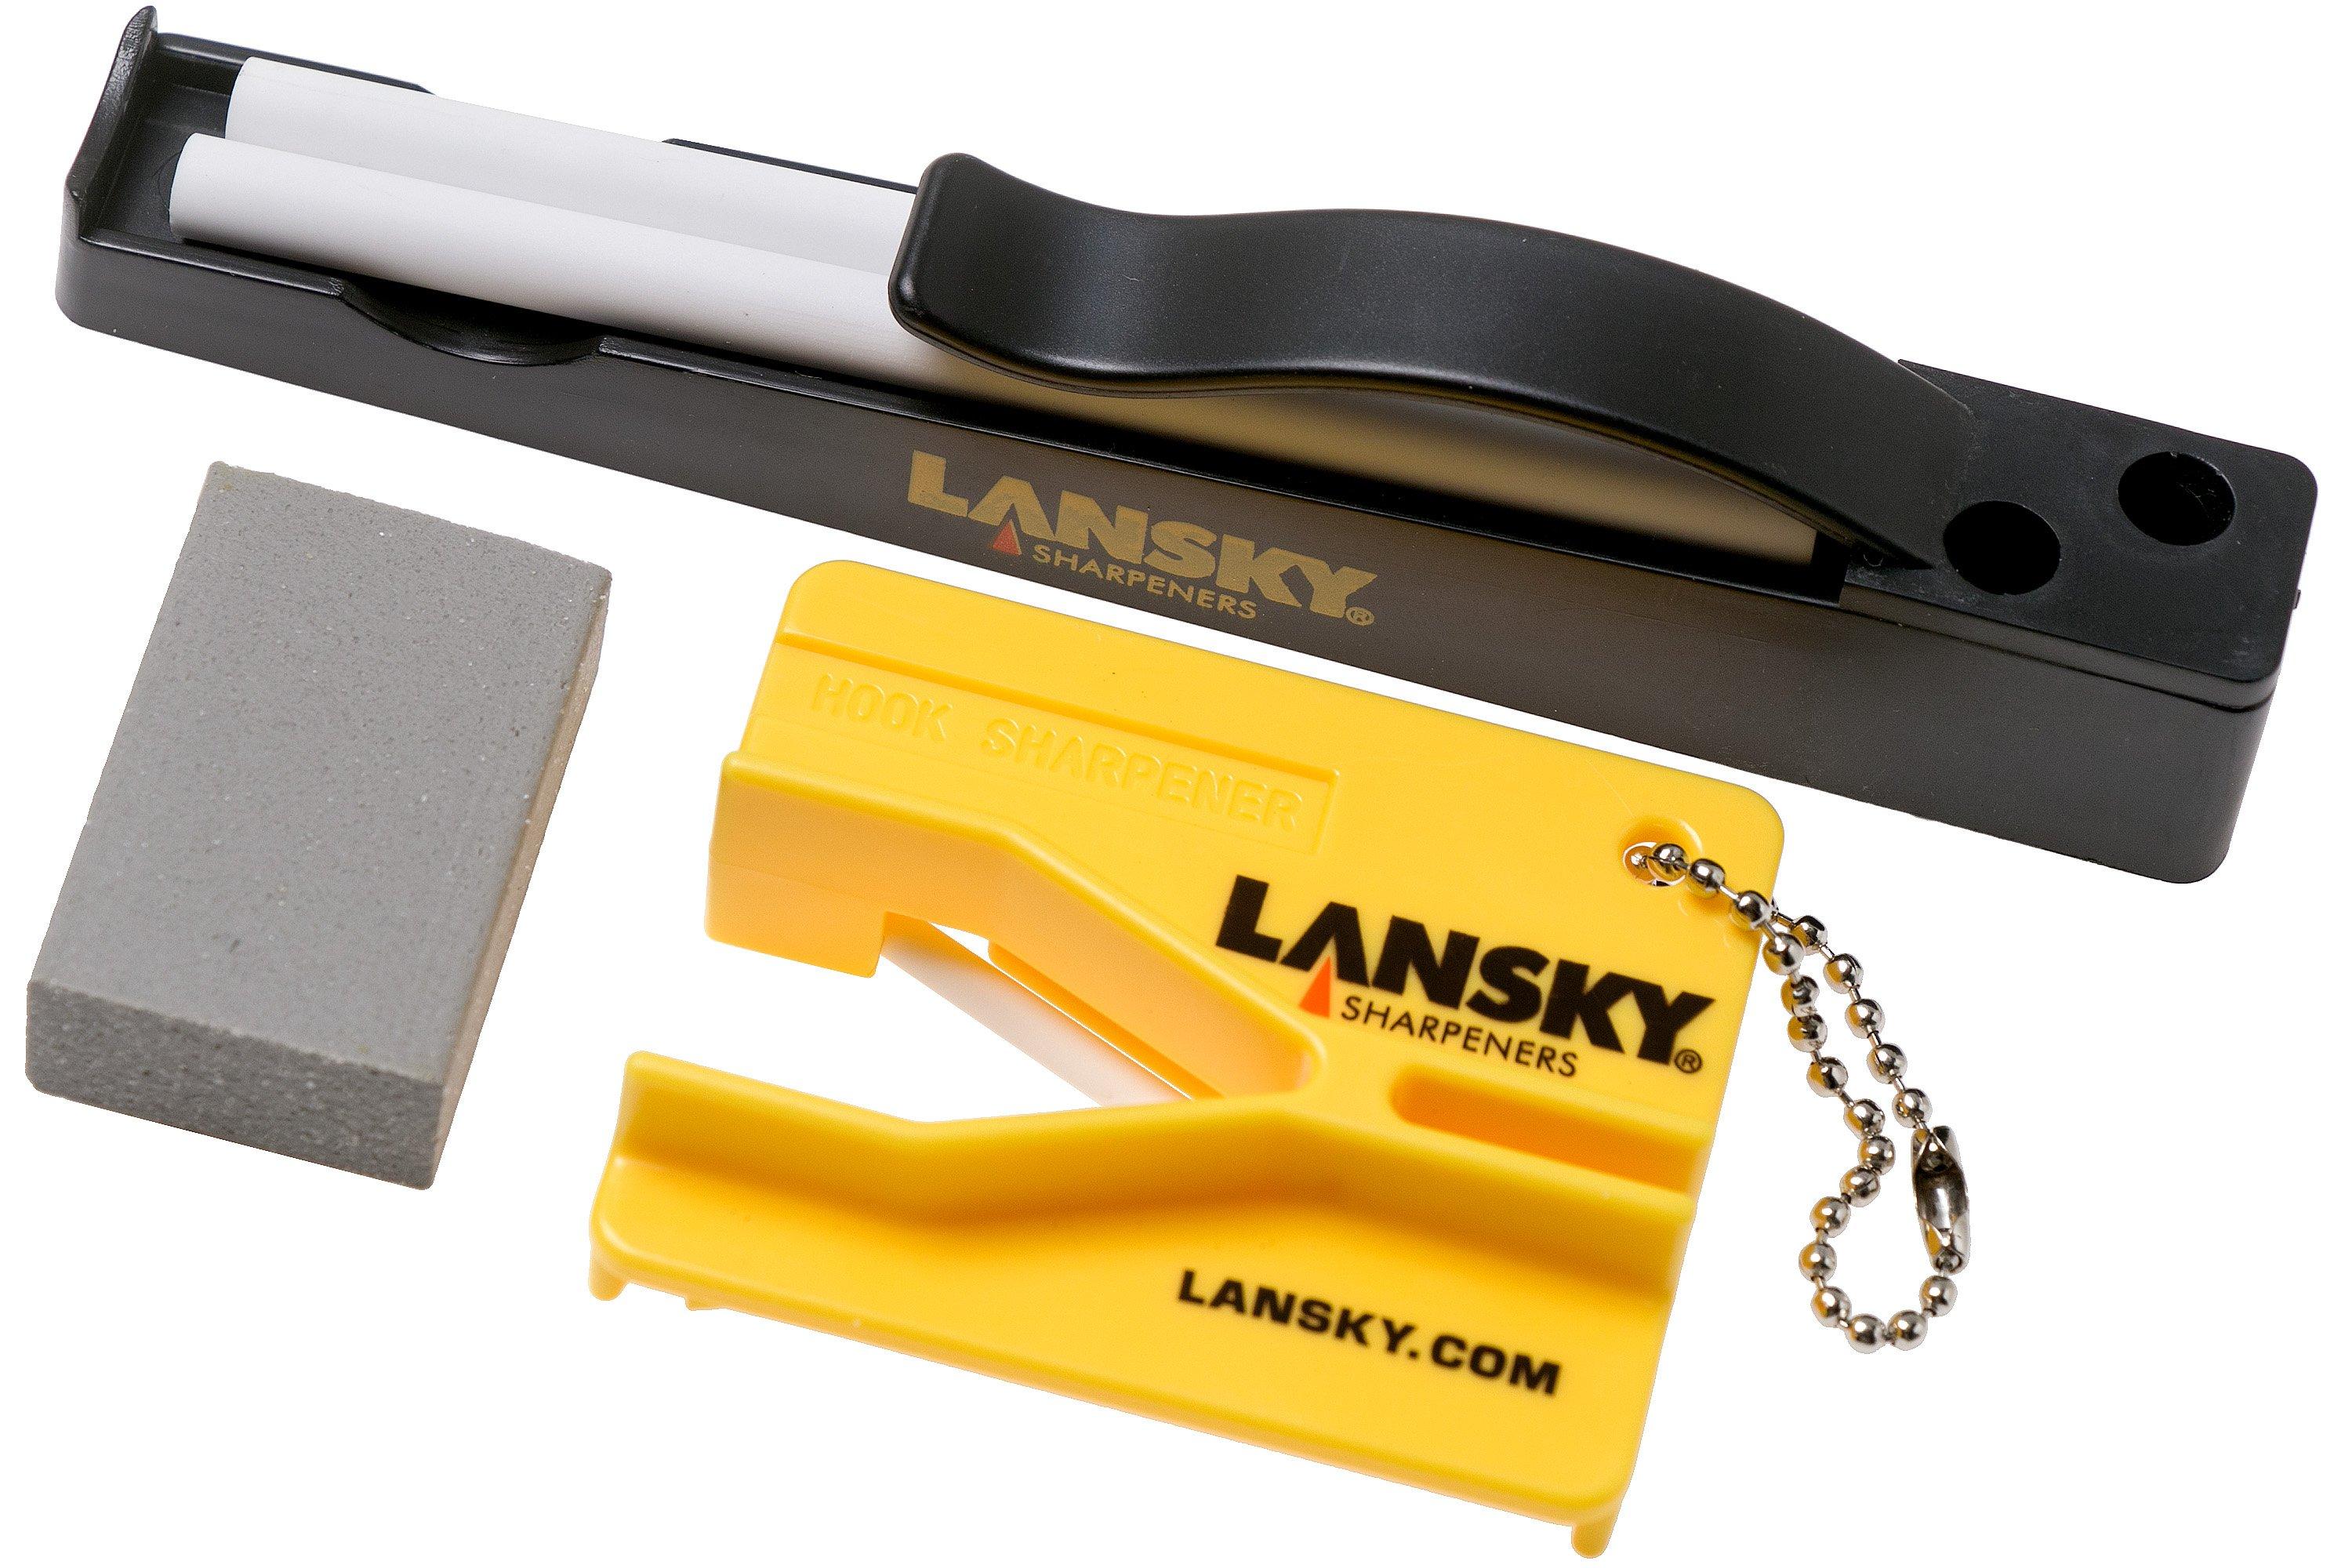 Lansky C-Clip Combo sharpening system set  Advantageously shopping at